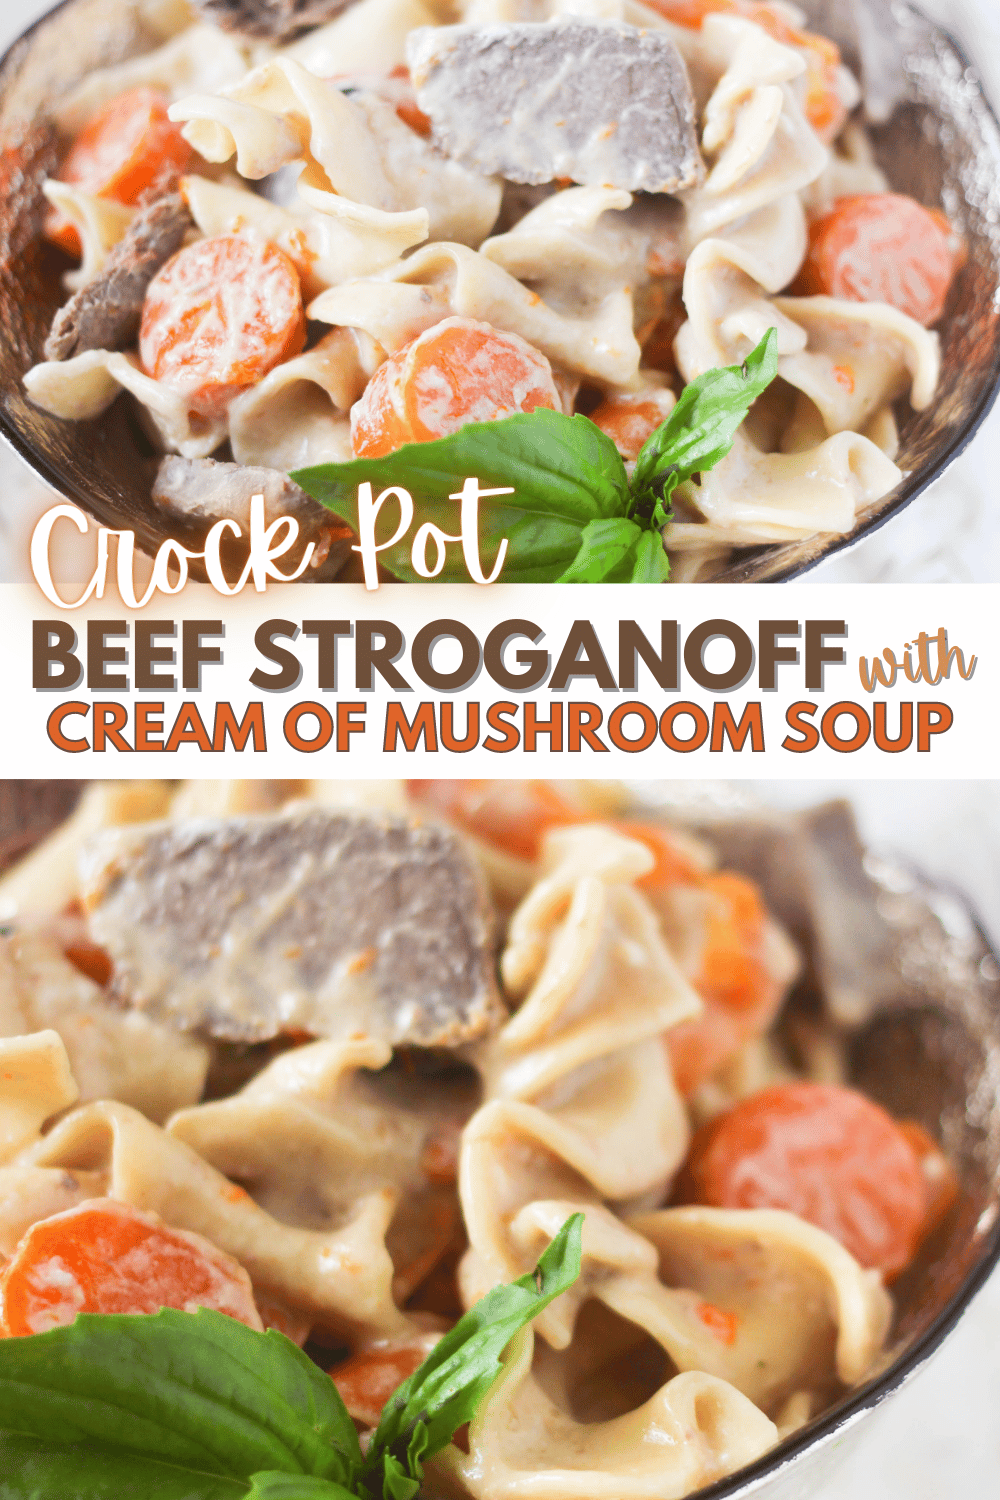 Crock Pot Beef Stroganoff with Cream of Mushroom Soup